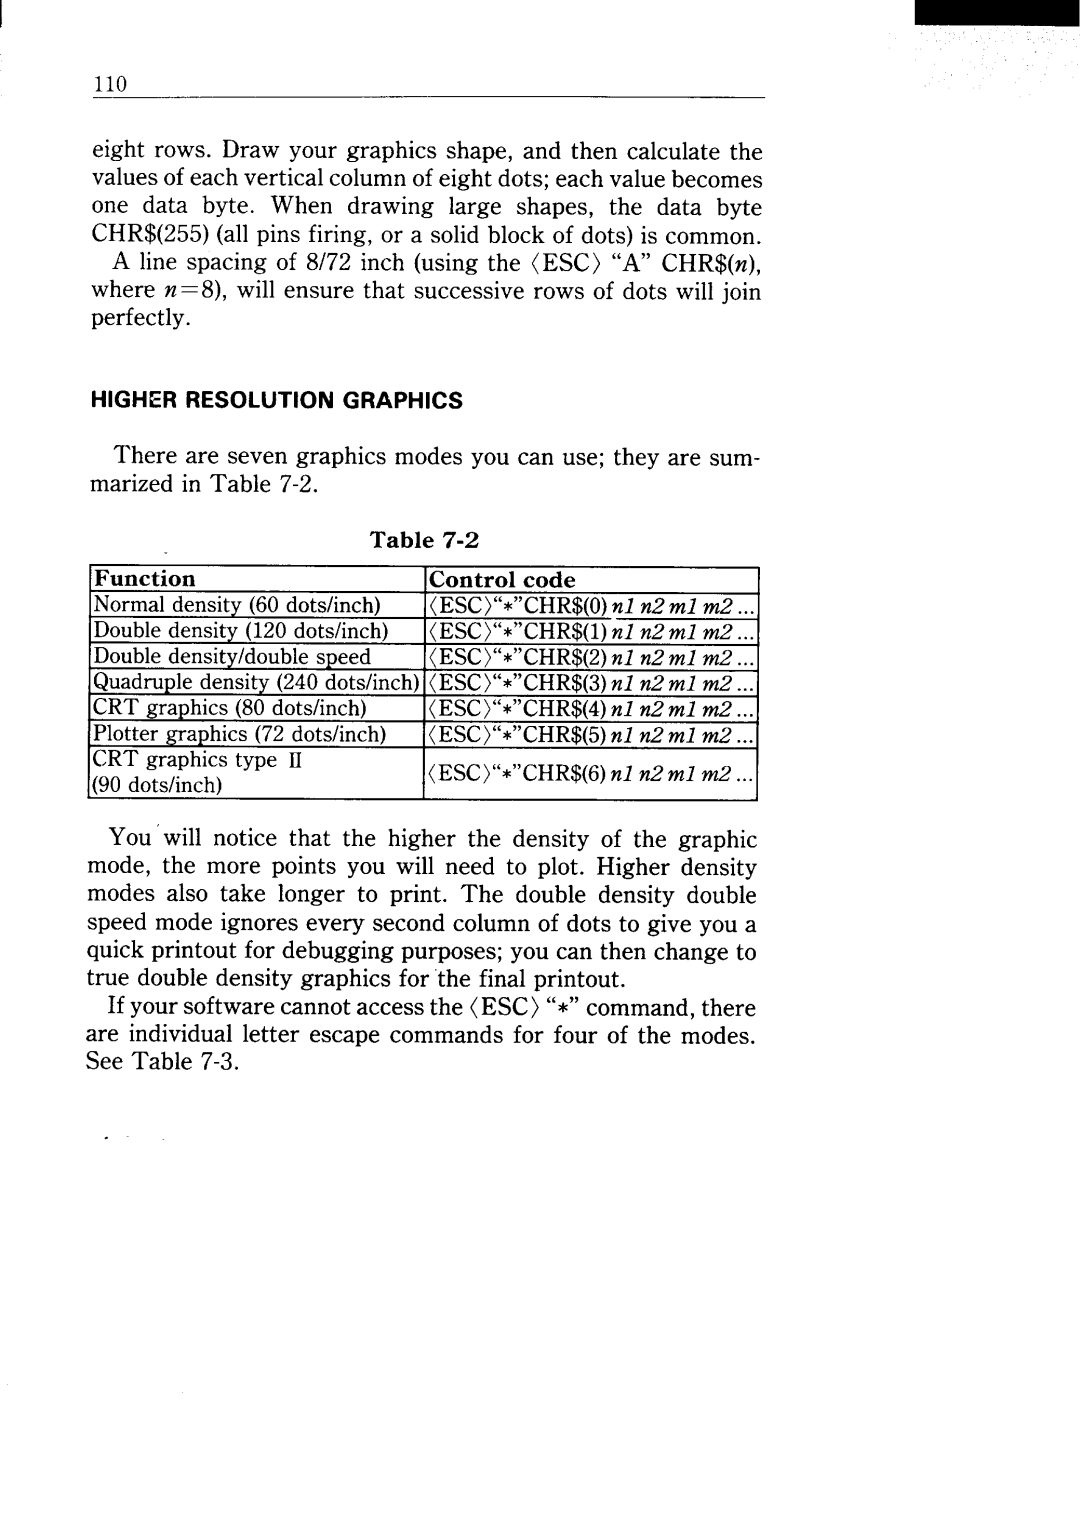 Star Micronics NX-15 user manual “CHR$2nl n2 ml m2 ...~ 